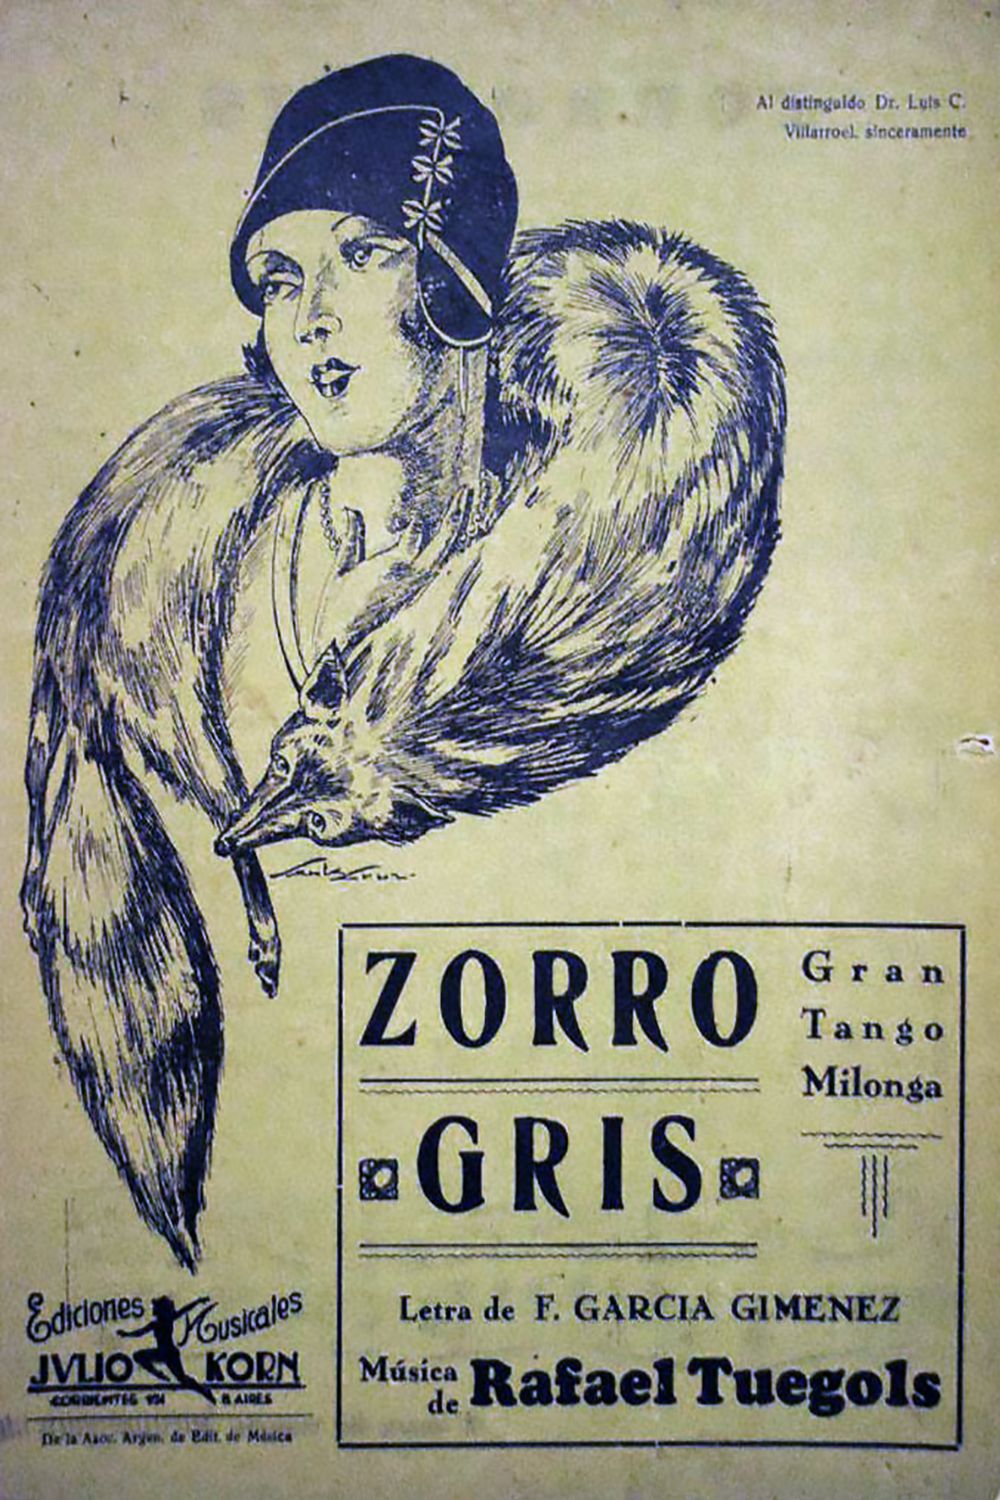 "Zorro gris", Argentine tango music sheet cover.